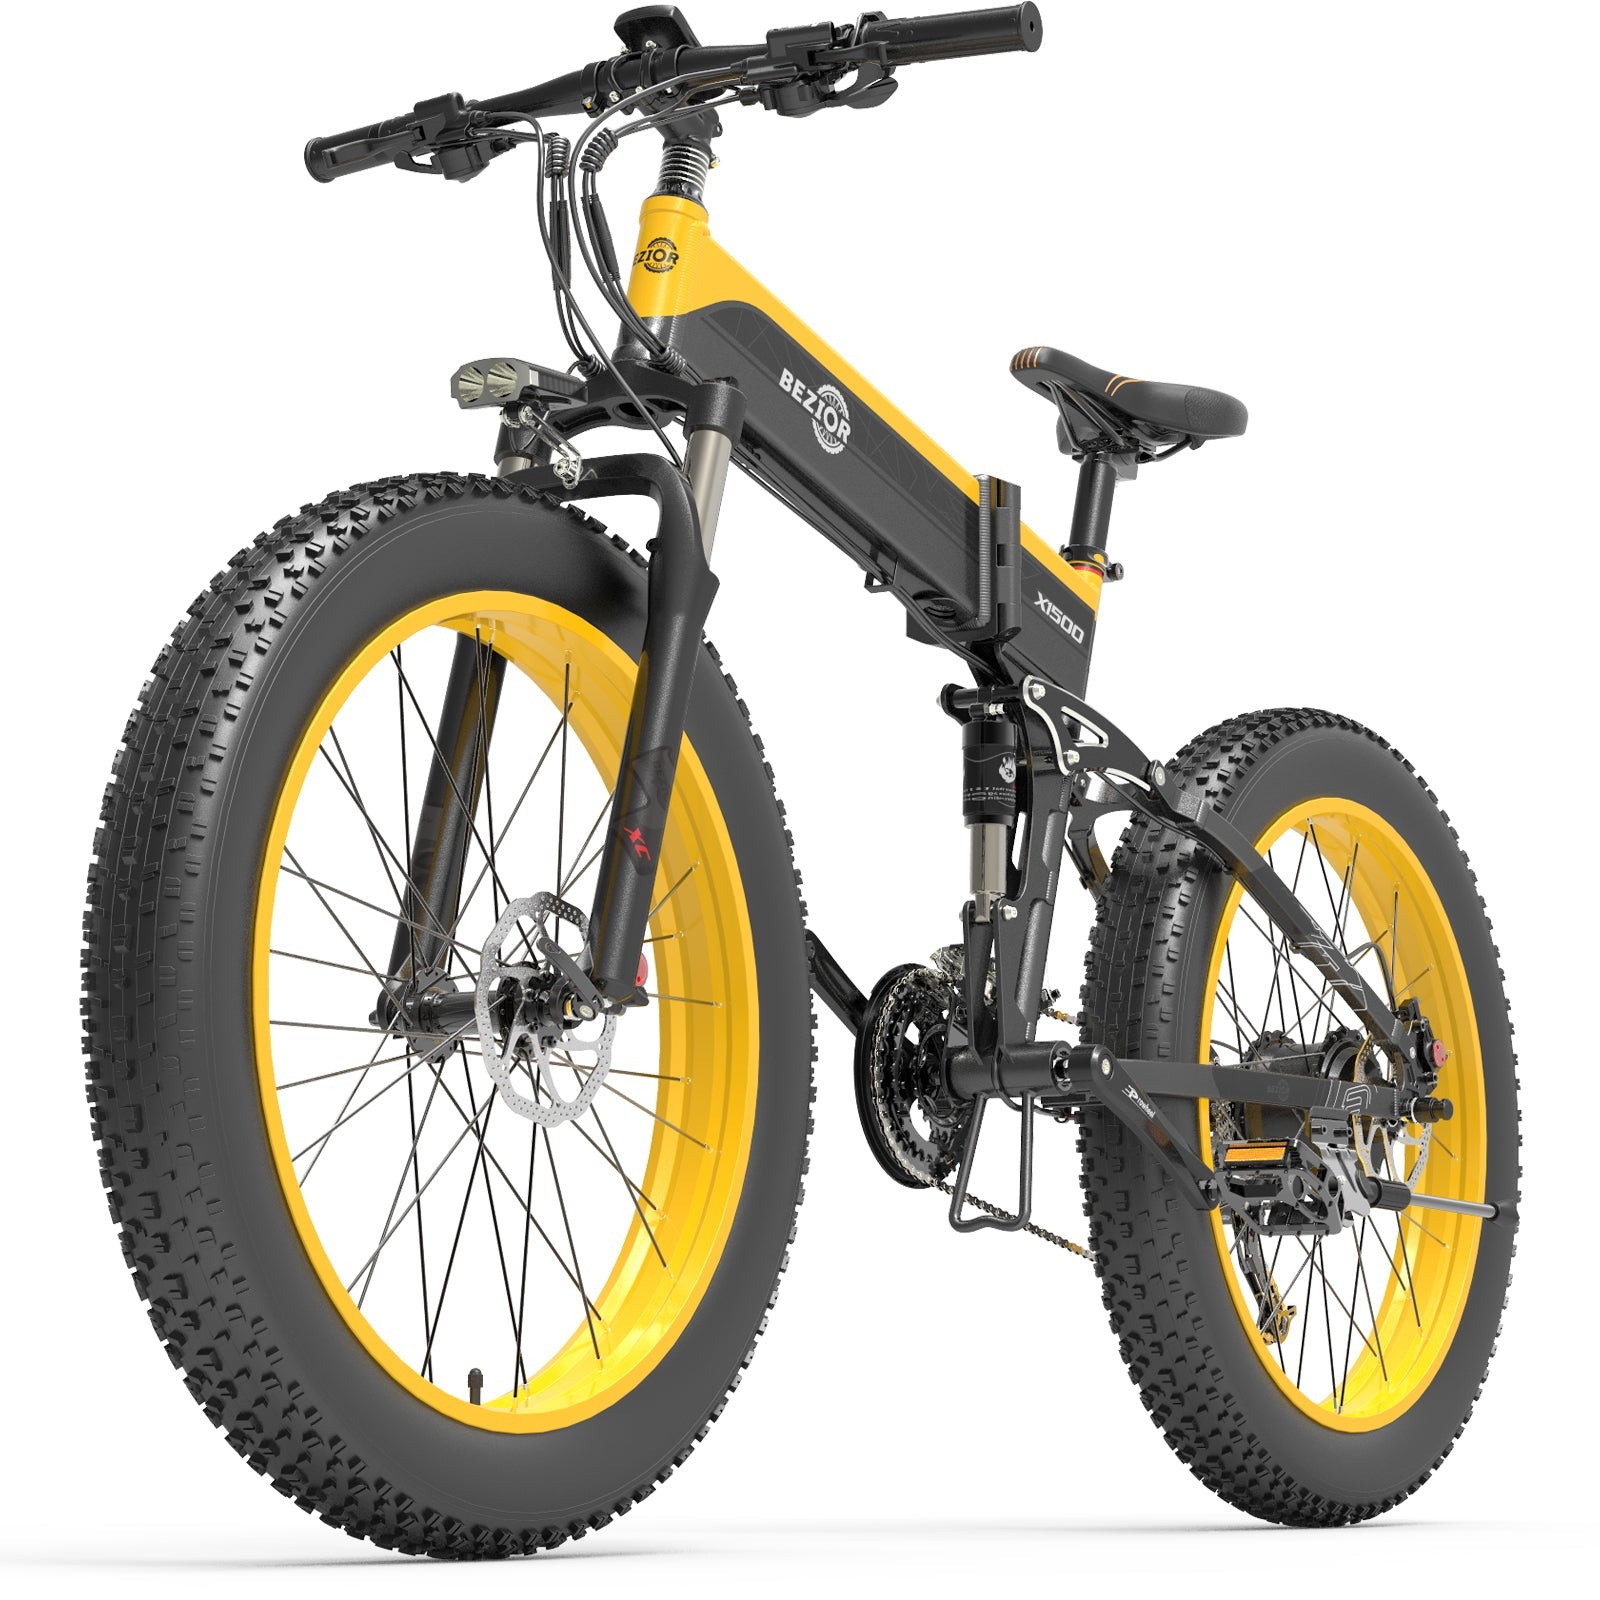 BEZIOR Ebike Wheels 26*4.0 inch Bike Inner Tubes 26*1.95 Presta Valve Bicycle Fat Tires 11